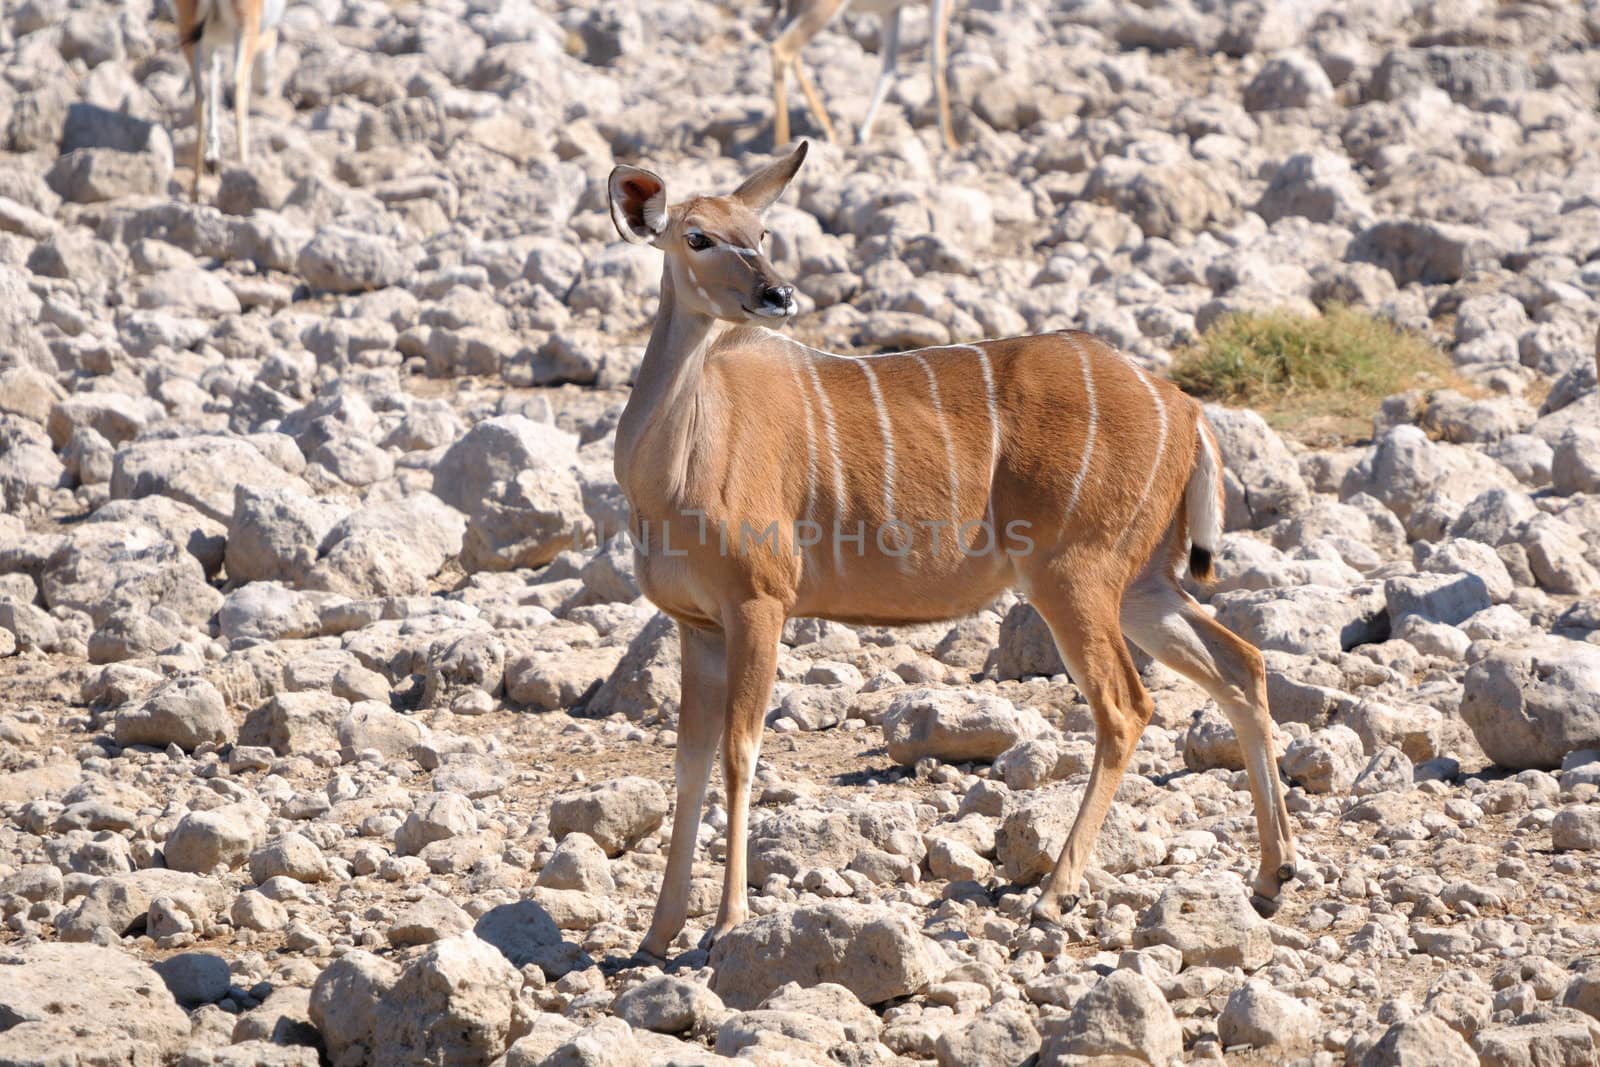 Greater Kudu cow in the Etosha National Park of Namibia